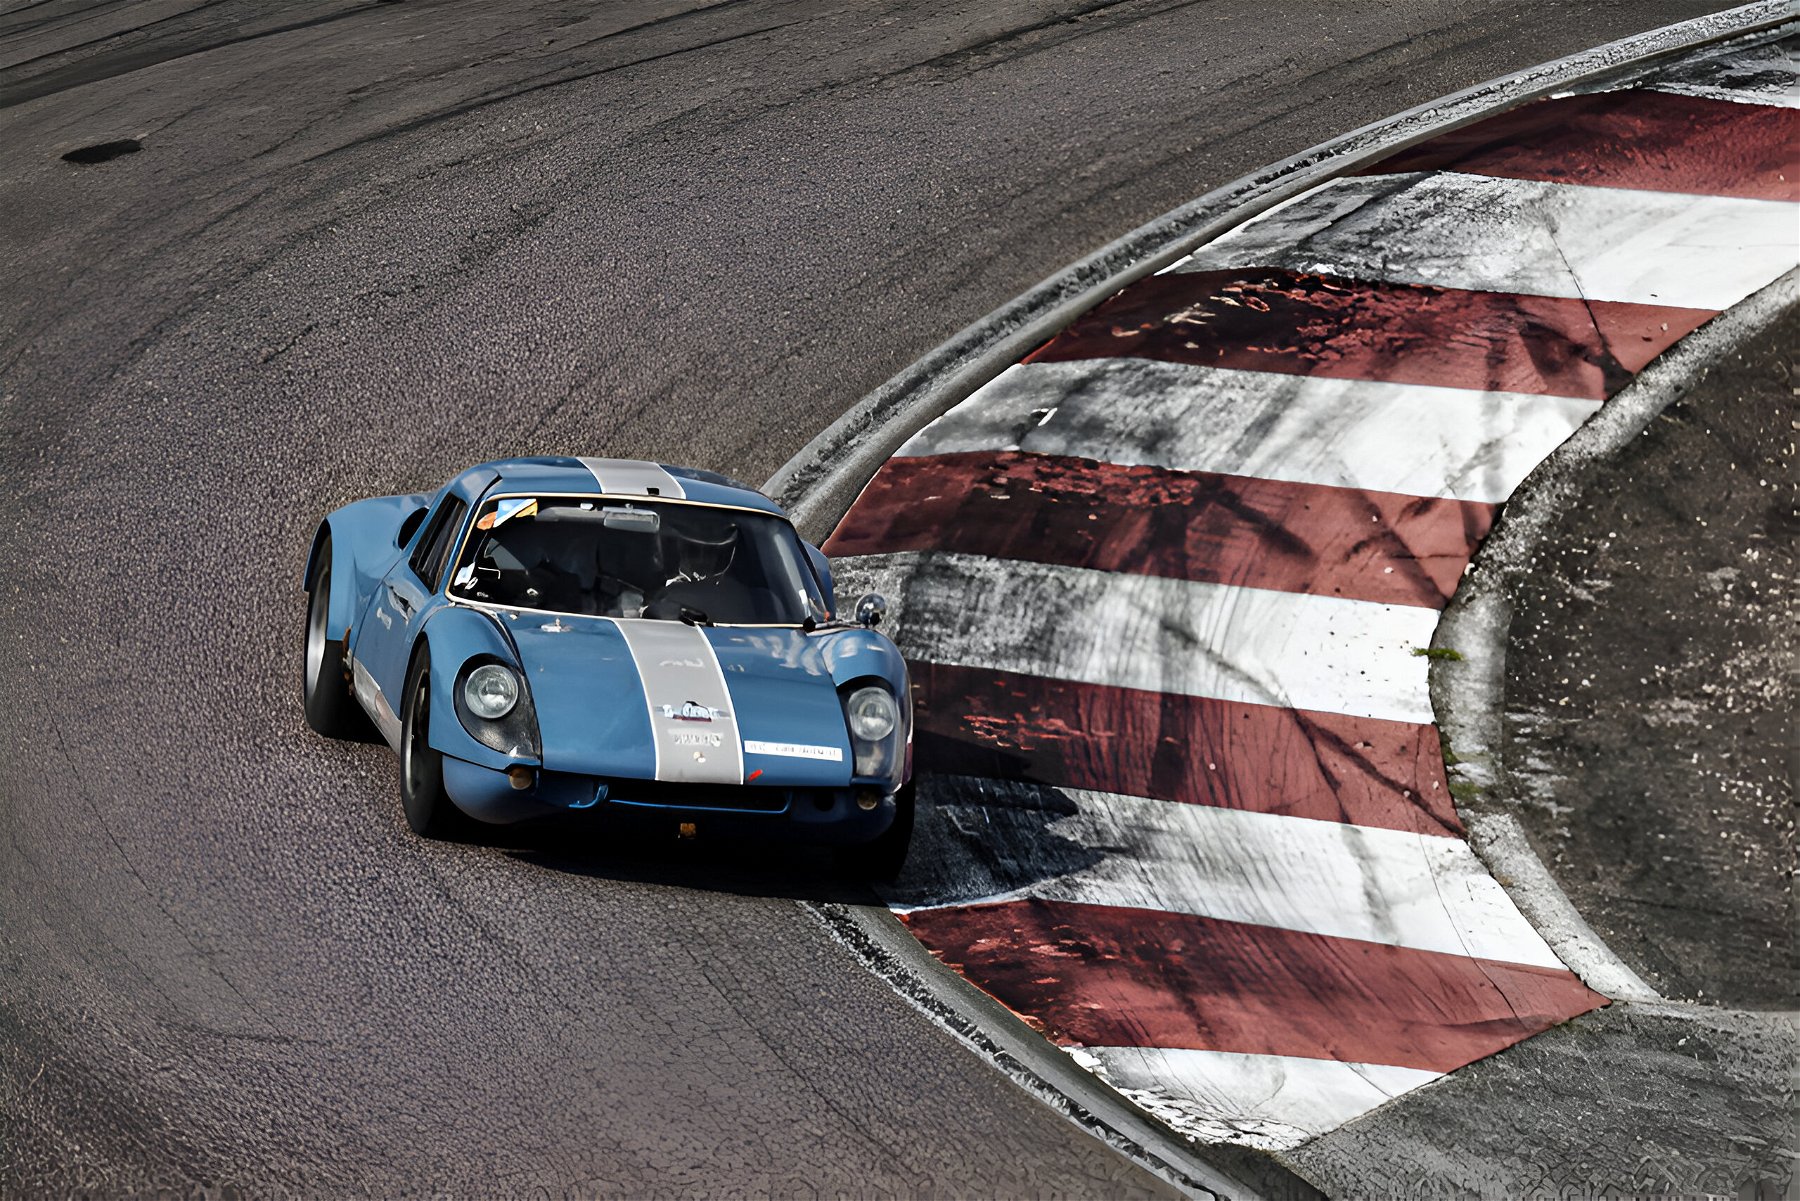 Among the Target Bavaria participants will be numerous historic Porsche race cars